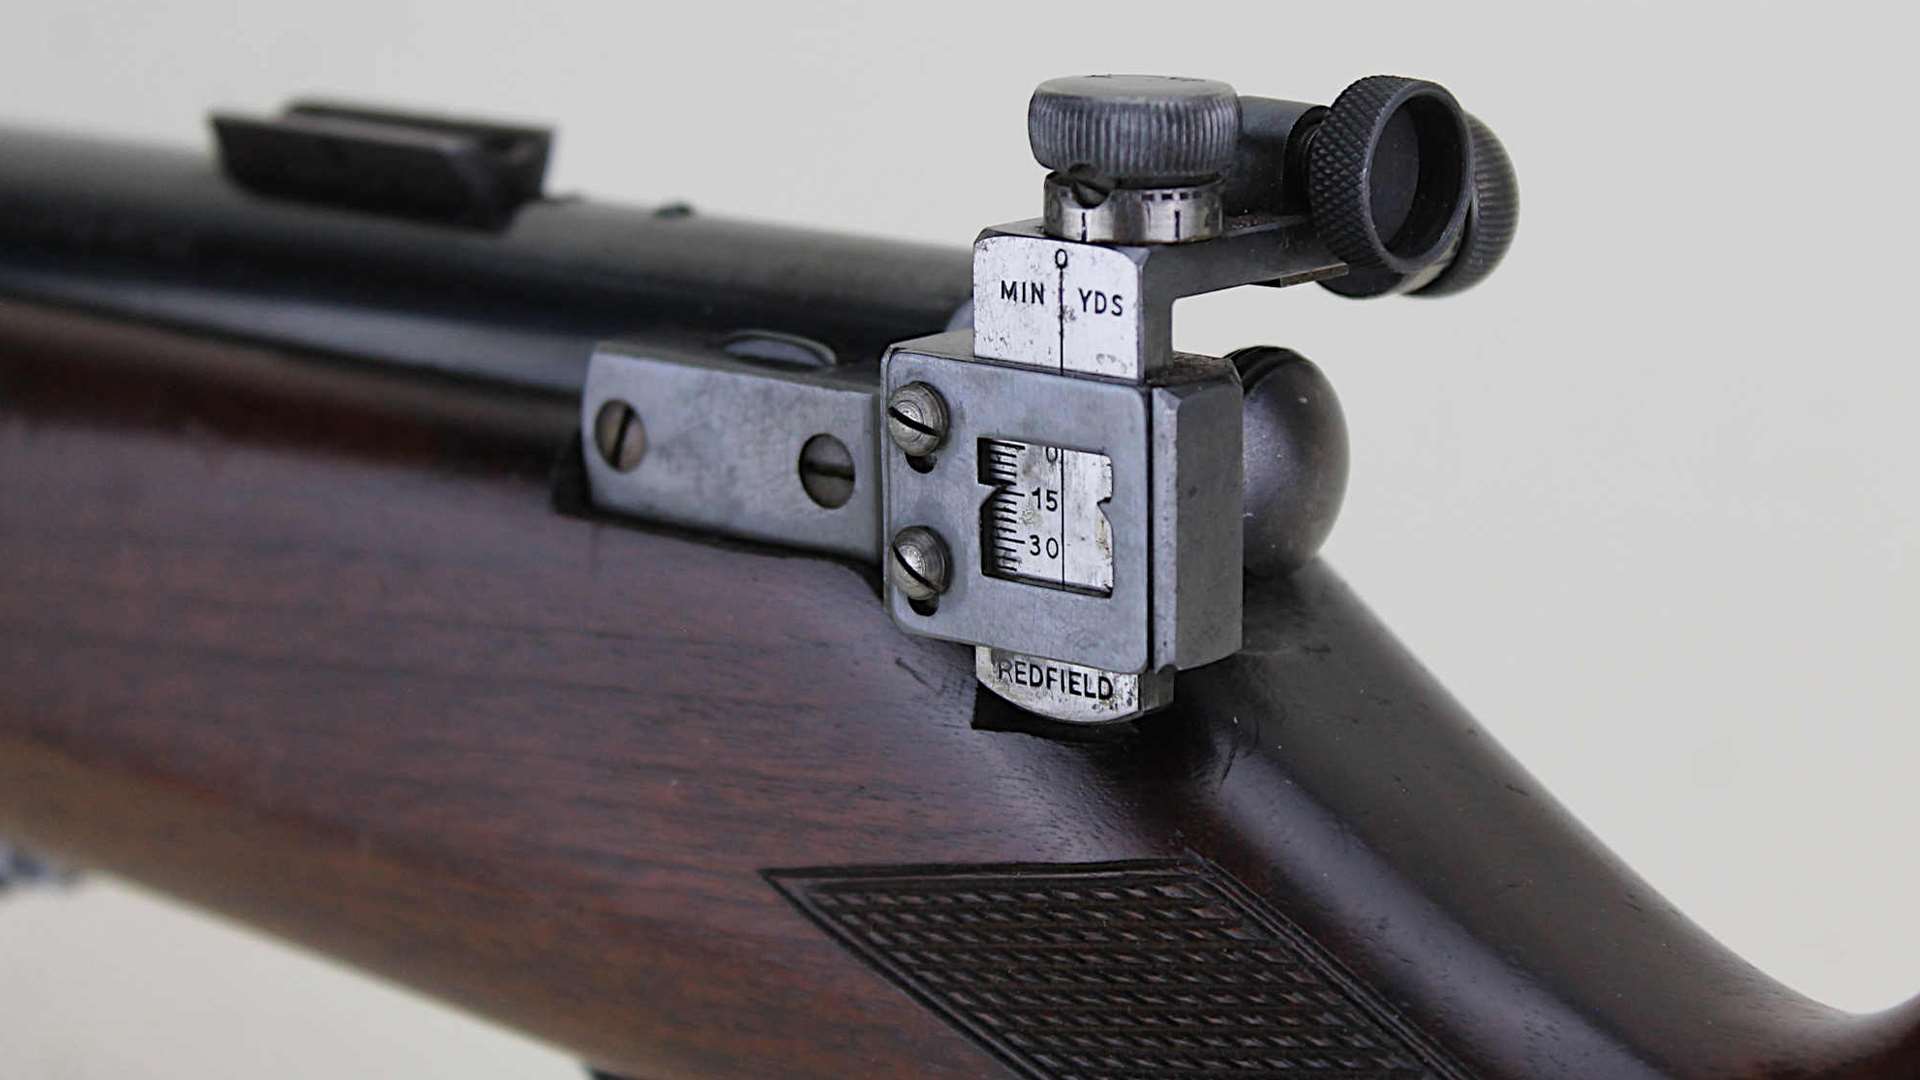 Redfield target sight on Model 19 rifle